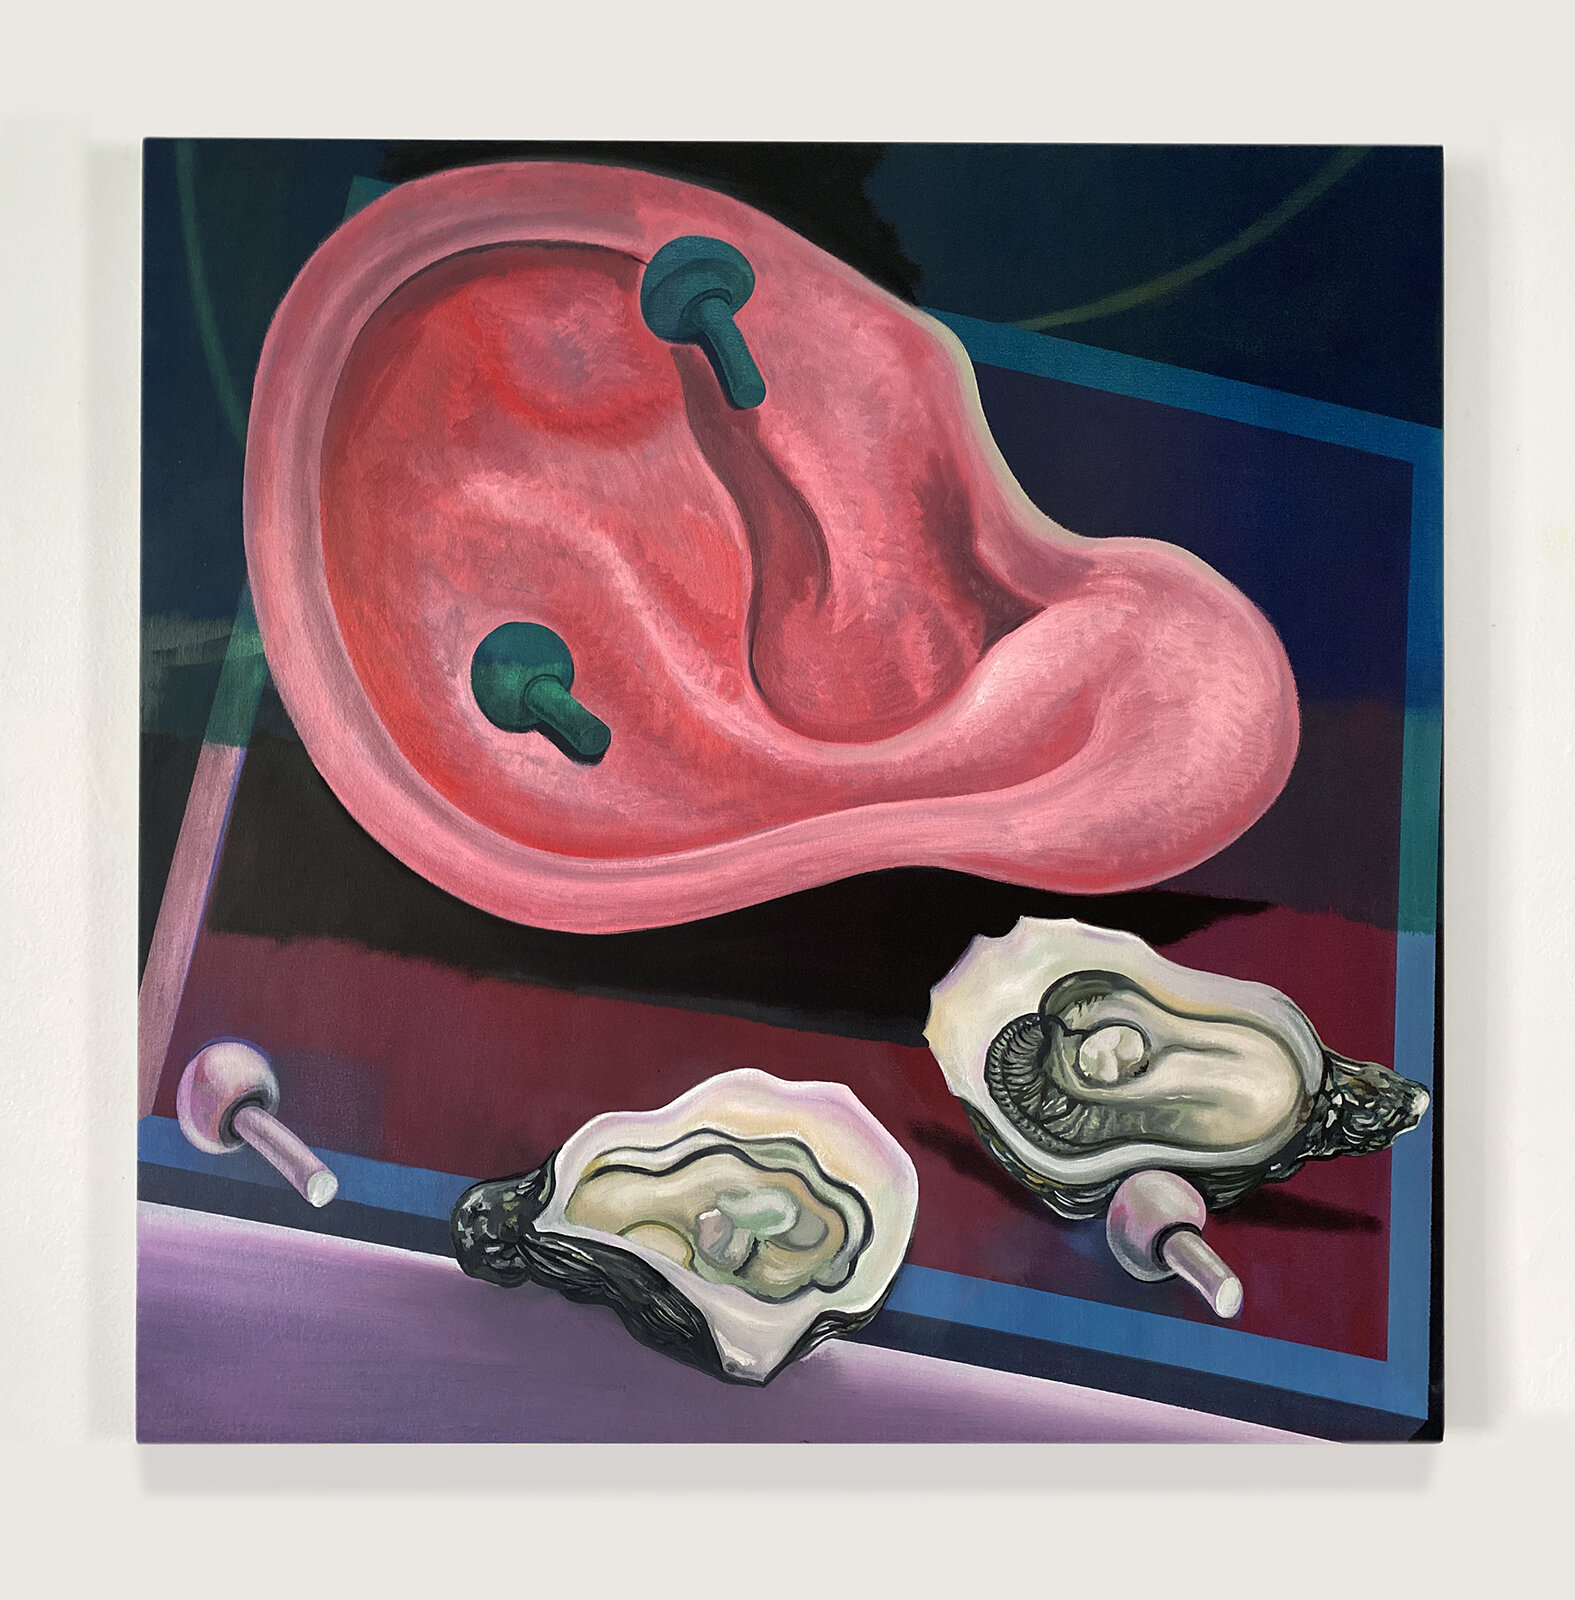  Untitled (Ear I), 2019  Oil on canvas  From the series  L’oreille, c’est une zone érogène  